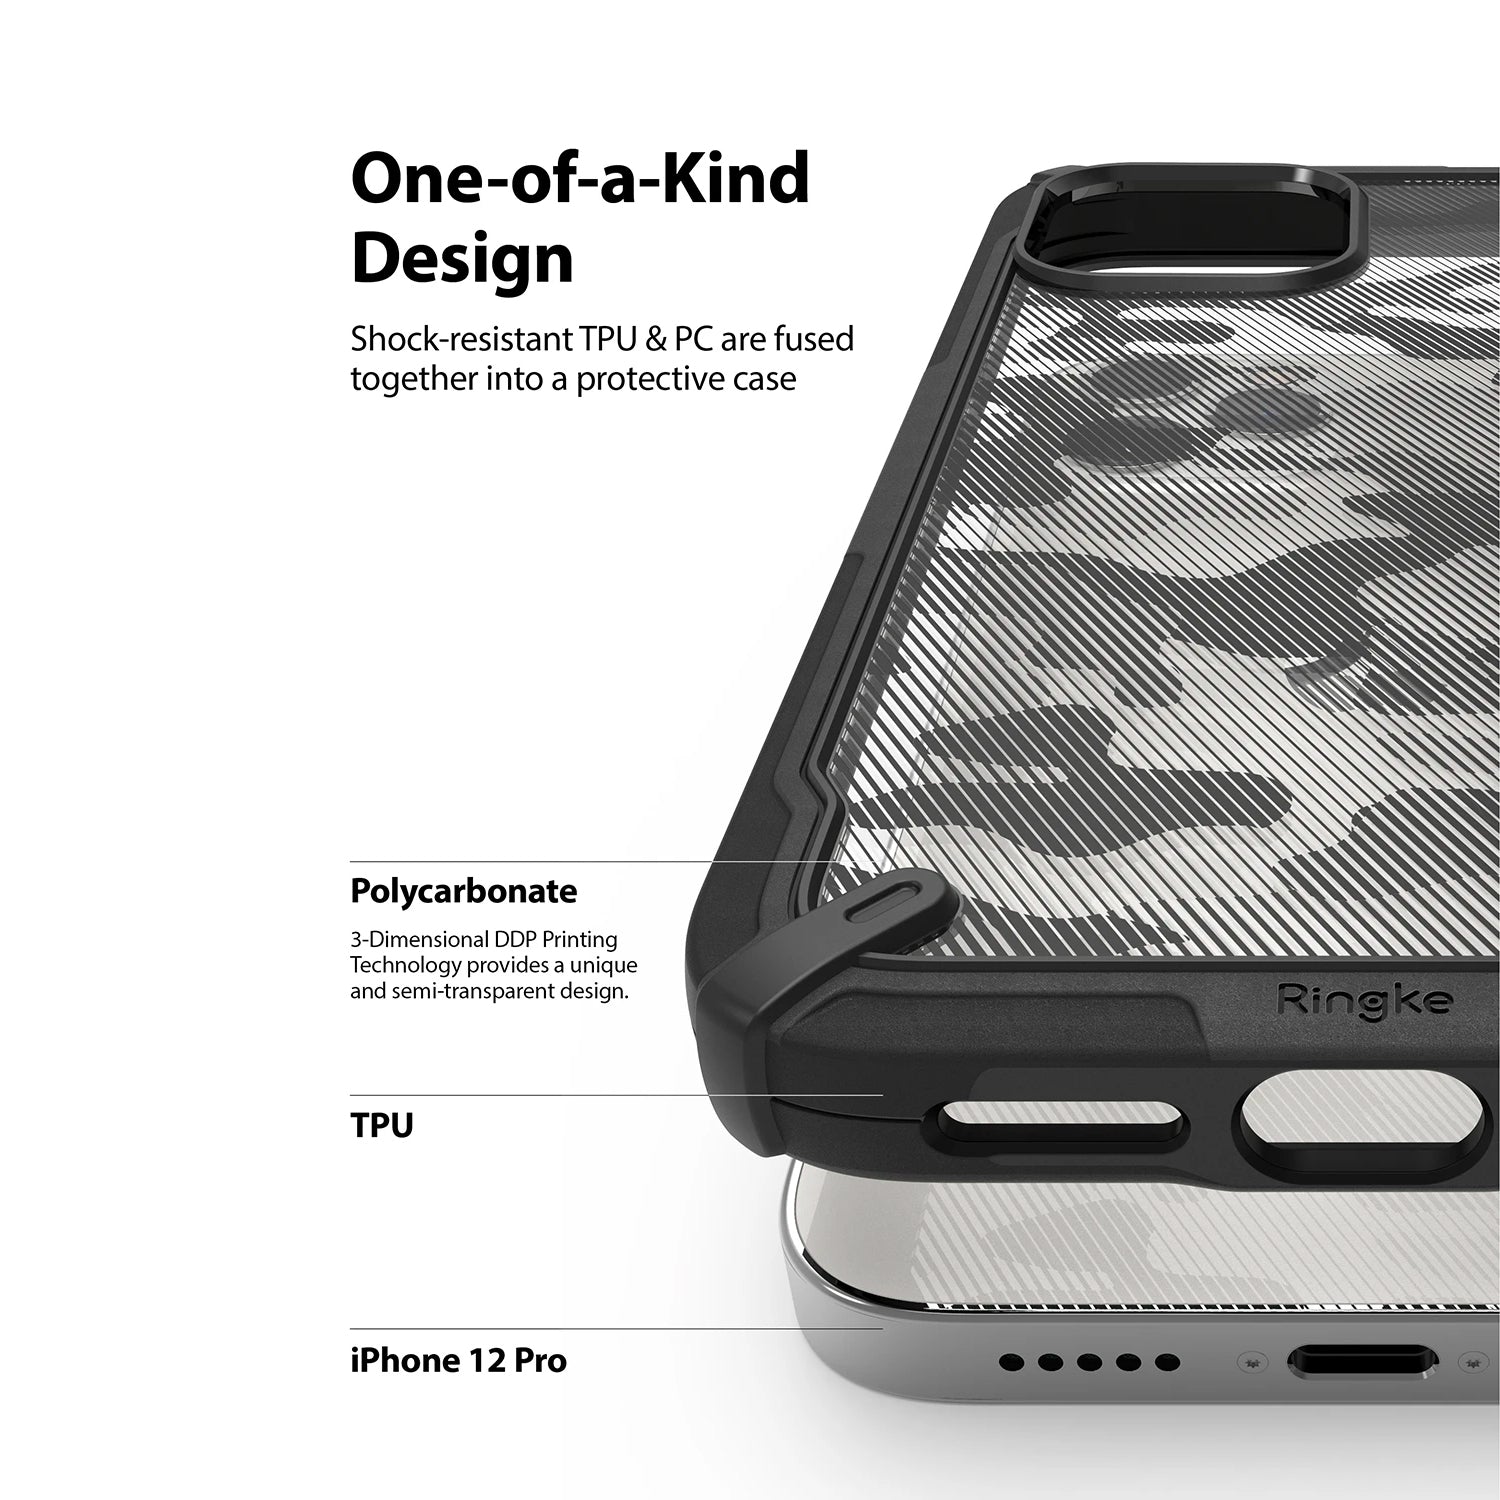 Ringke iPhone 12 / 12 Pro Case Fusion-X Camo Black